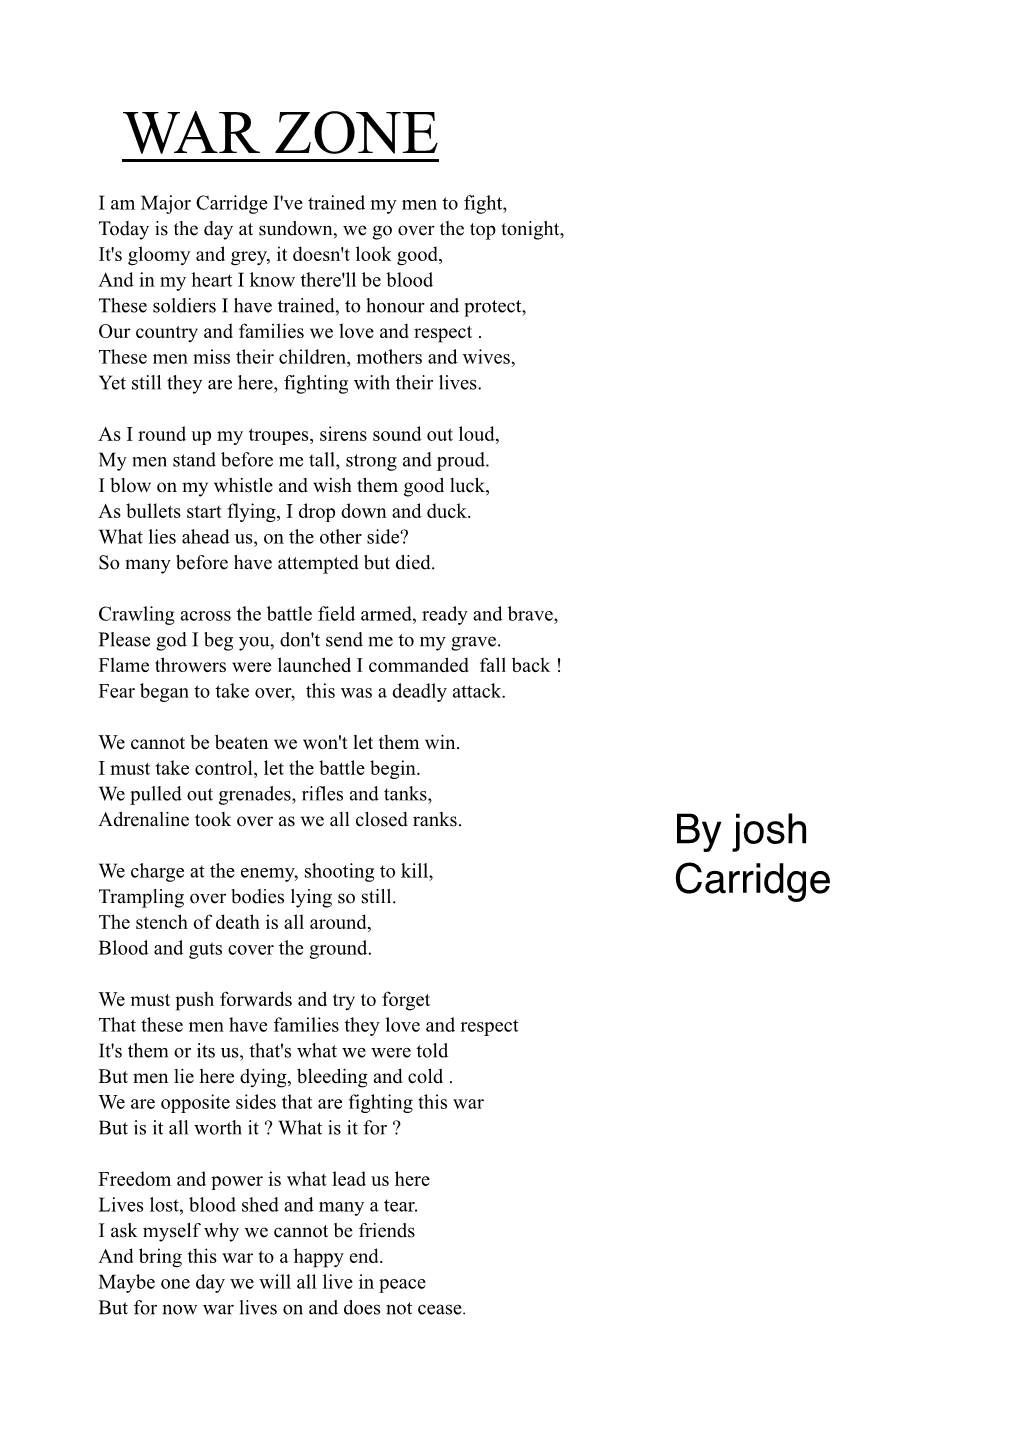 Josh Carridge's Poem